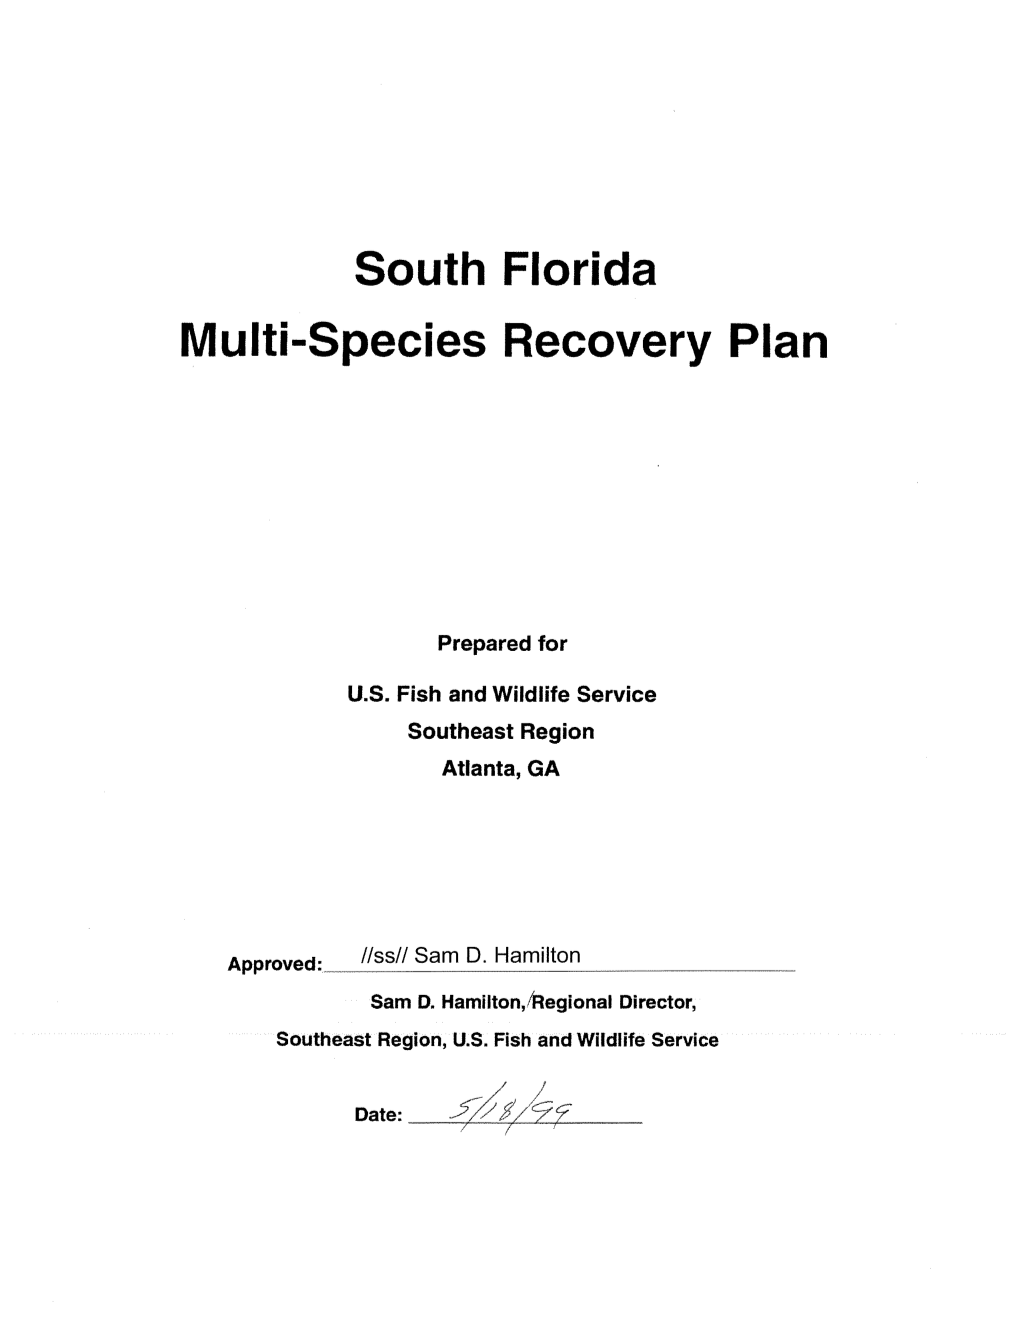 FWS (U.S. Fish and Wildlife Service). 1999. South Florida Multi-Species